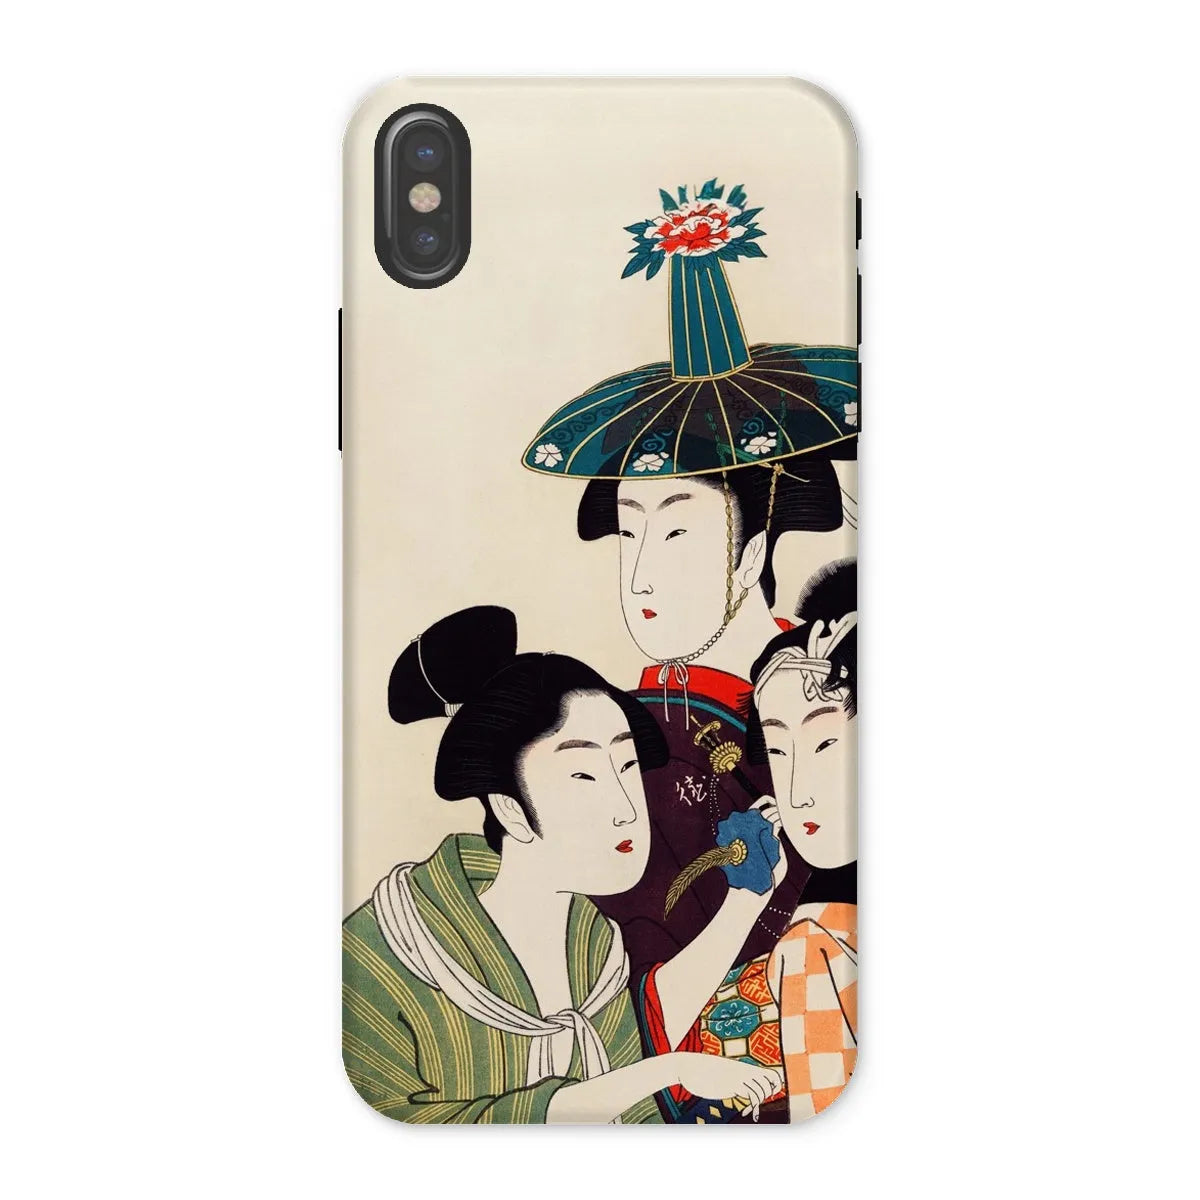 3 Young Men Or Women - Japanese Ukiyo-e Phone Case - Utamaro - Iphone x / Matte - Mobile Phone Cases - Aesthetic Art